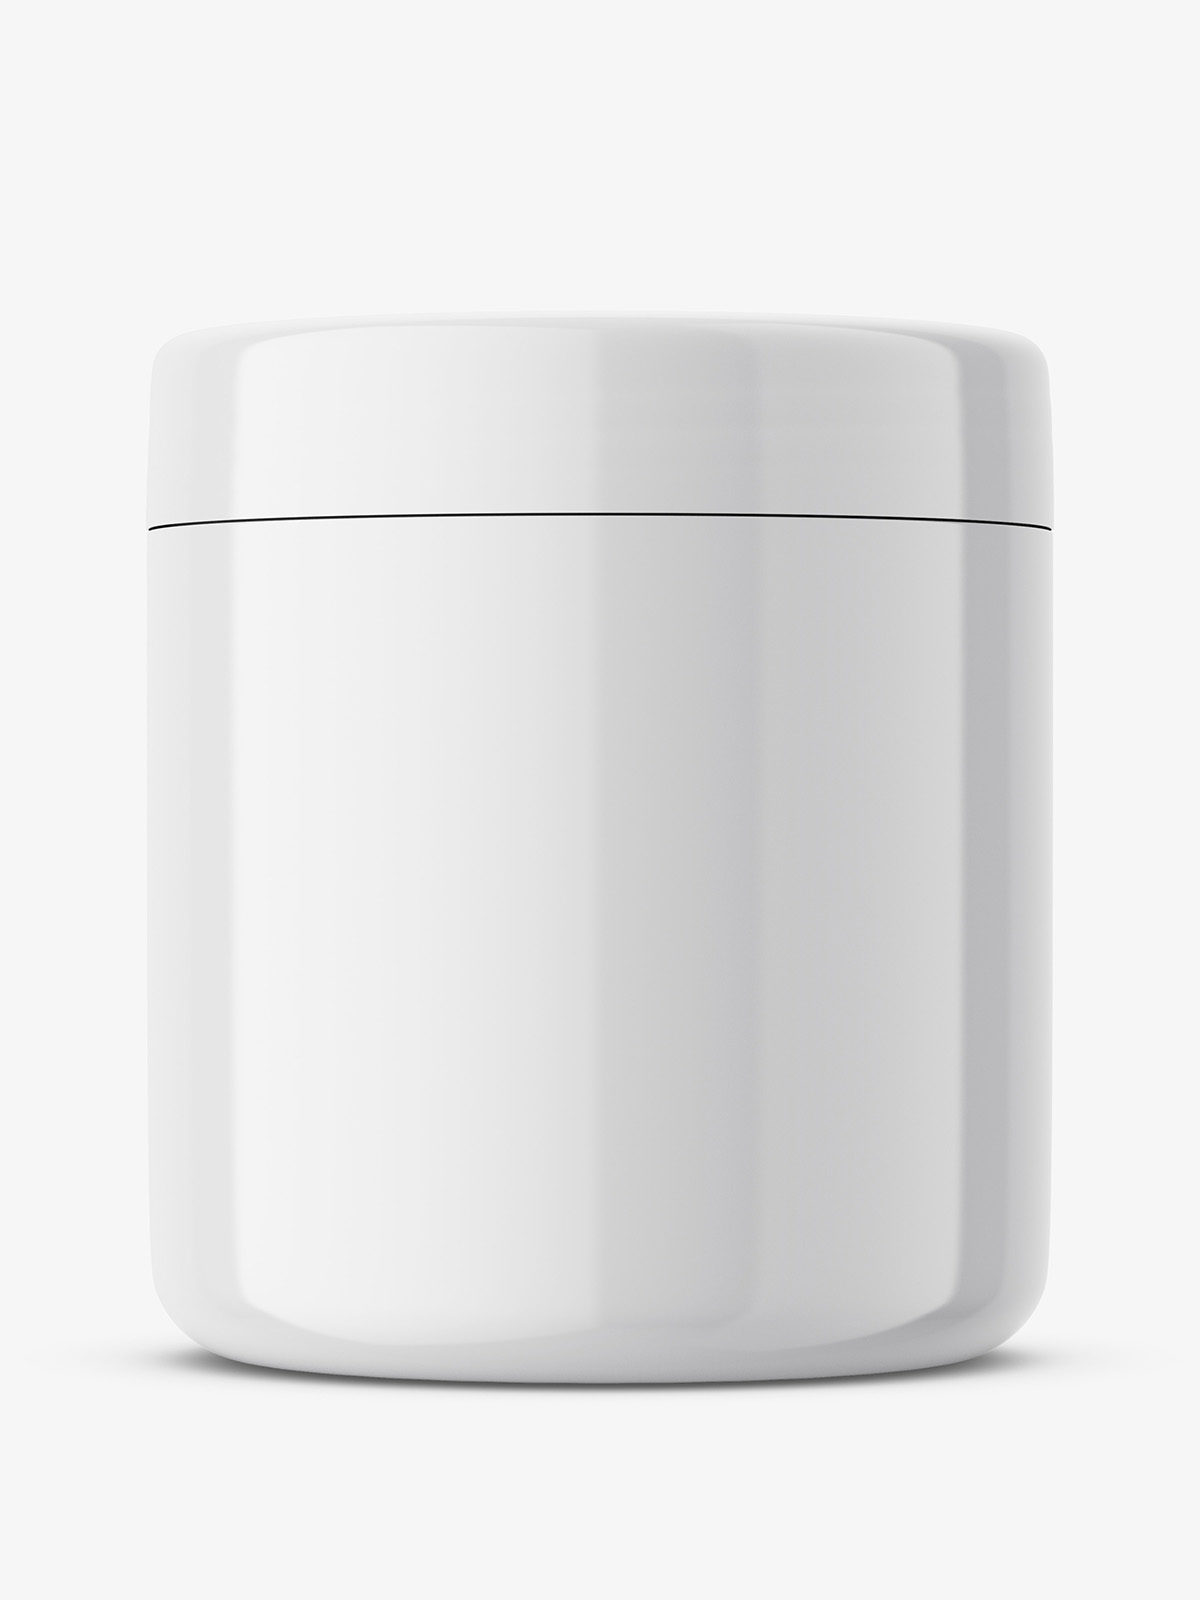 Download Glossy cosmetic jar mockup - Smarty Mockups